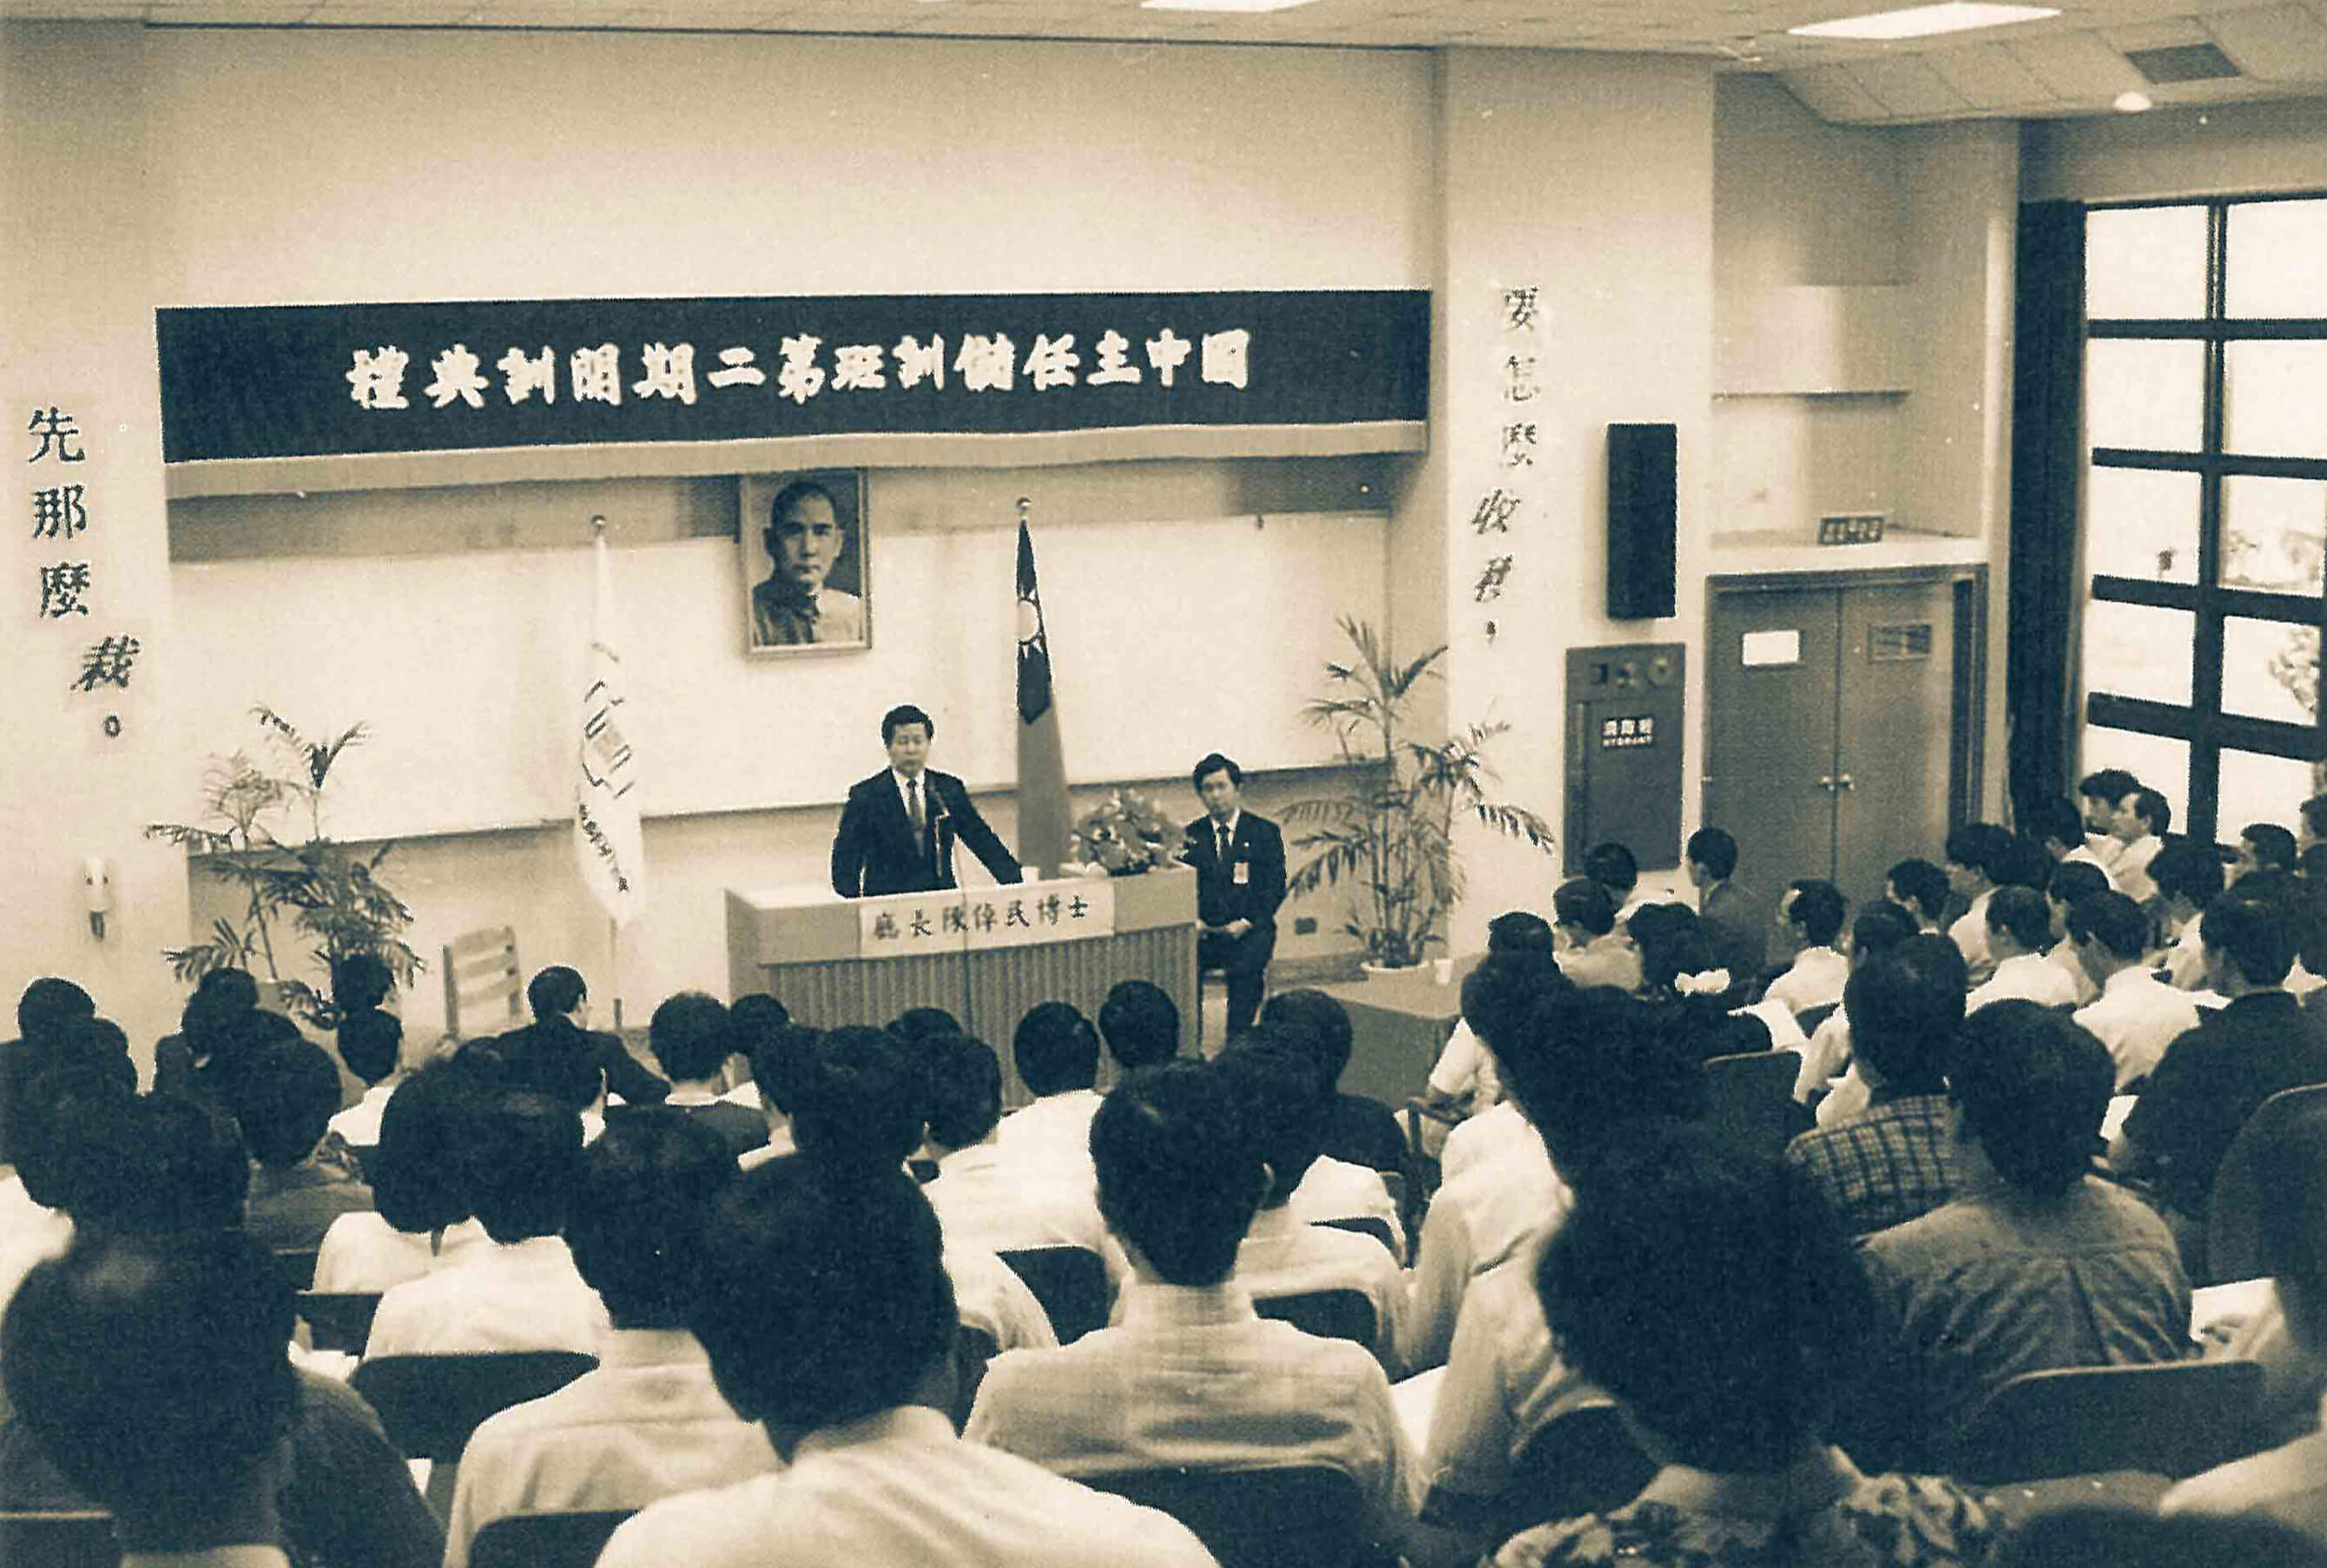 Taiwan Provincial Training & Development lnstitute for Secondary School Teachers